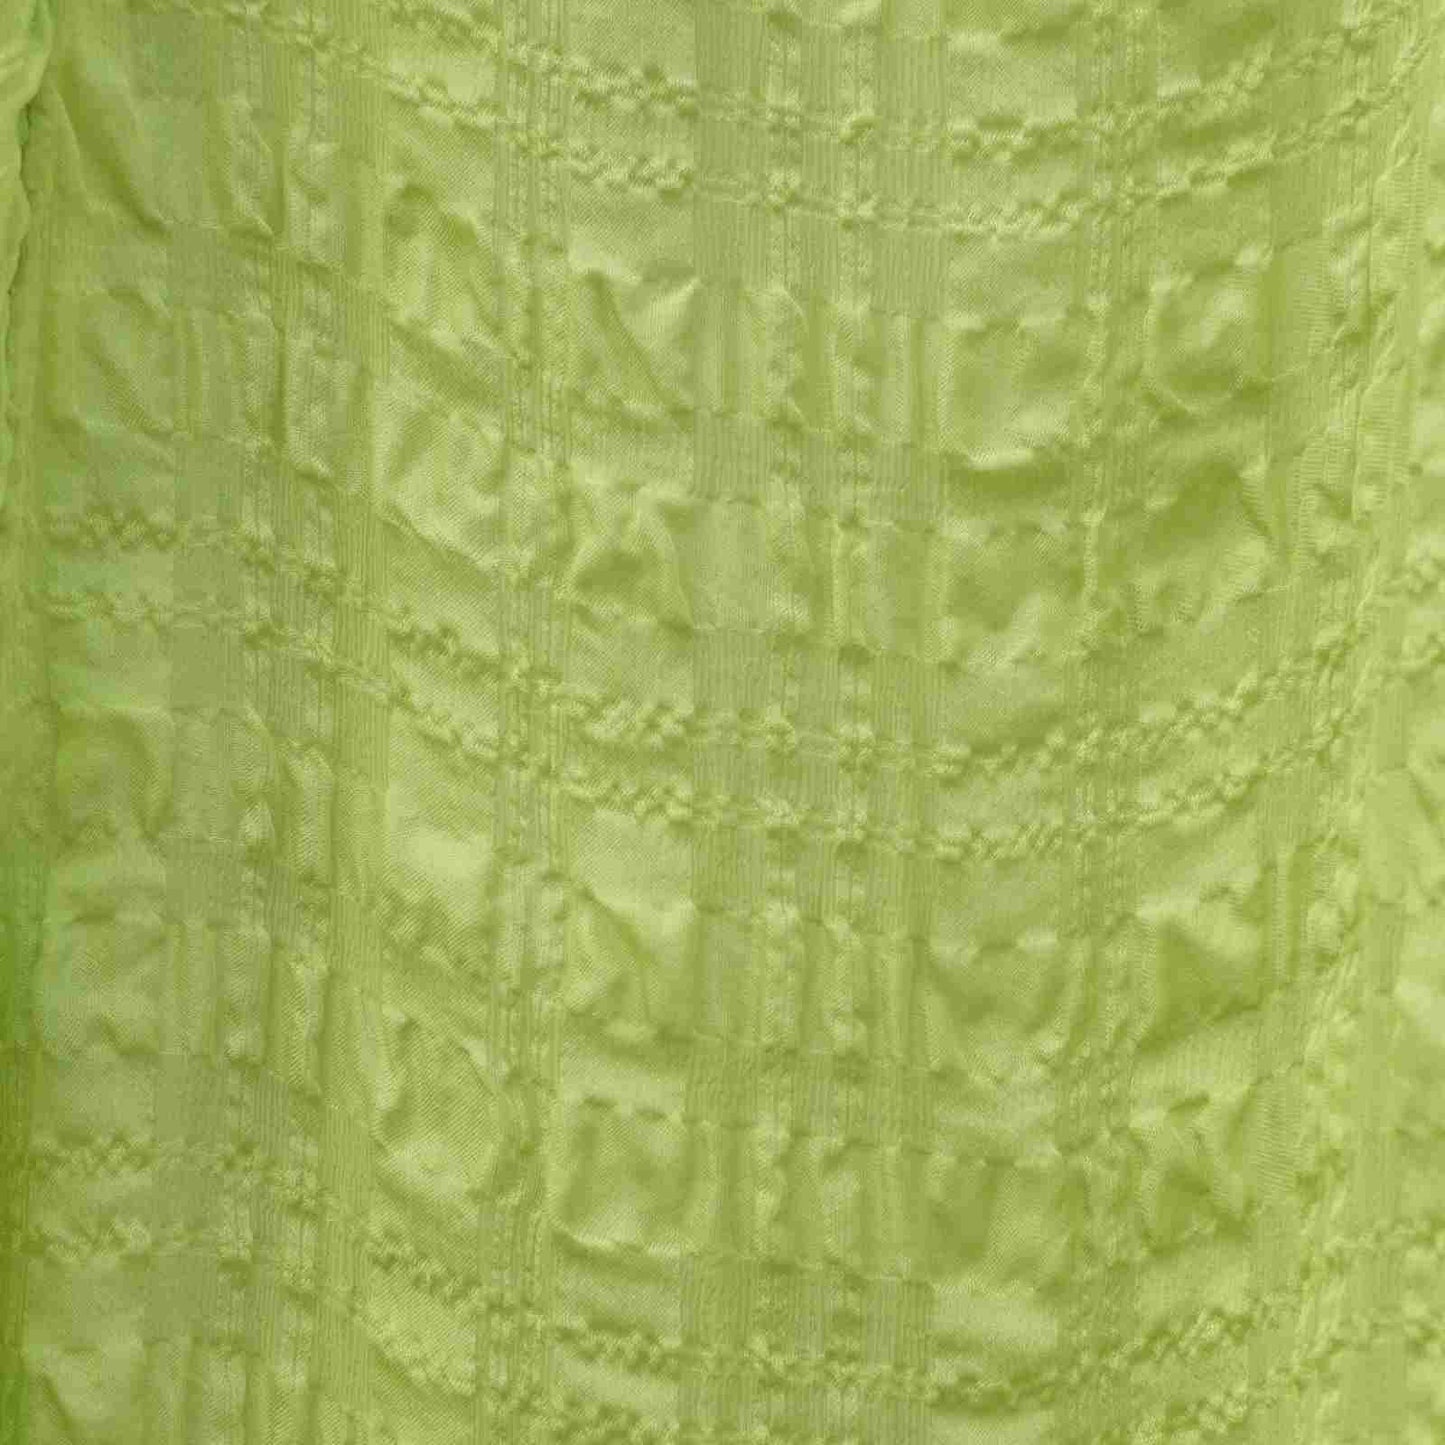 Stof detalje af limegrøn silkekjole